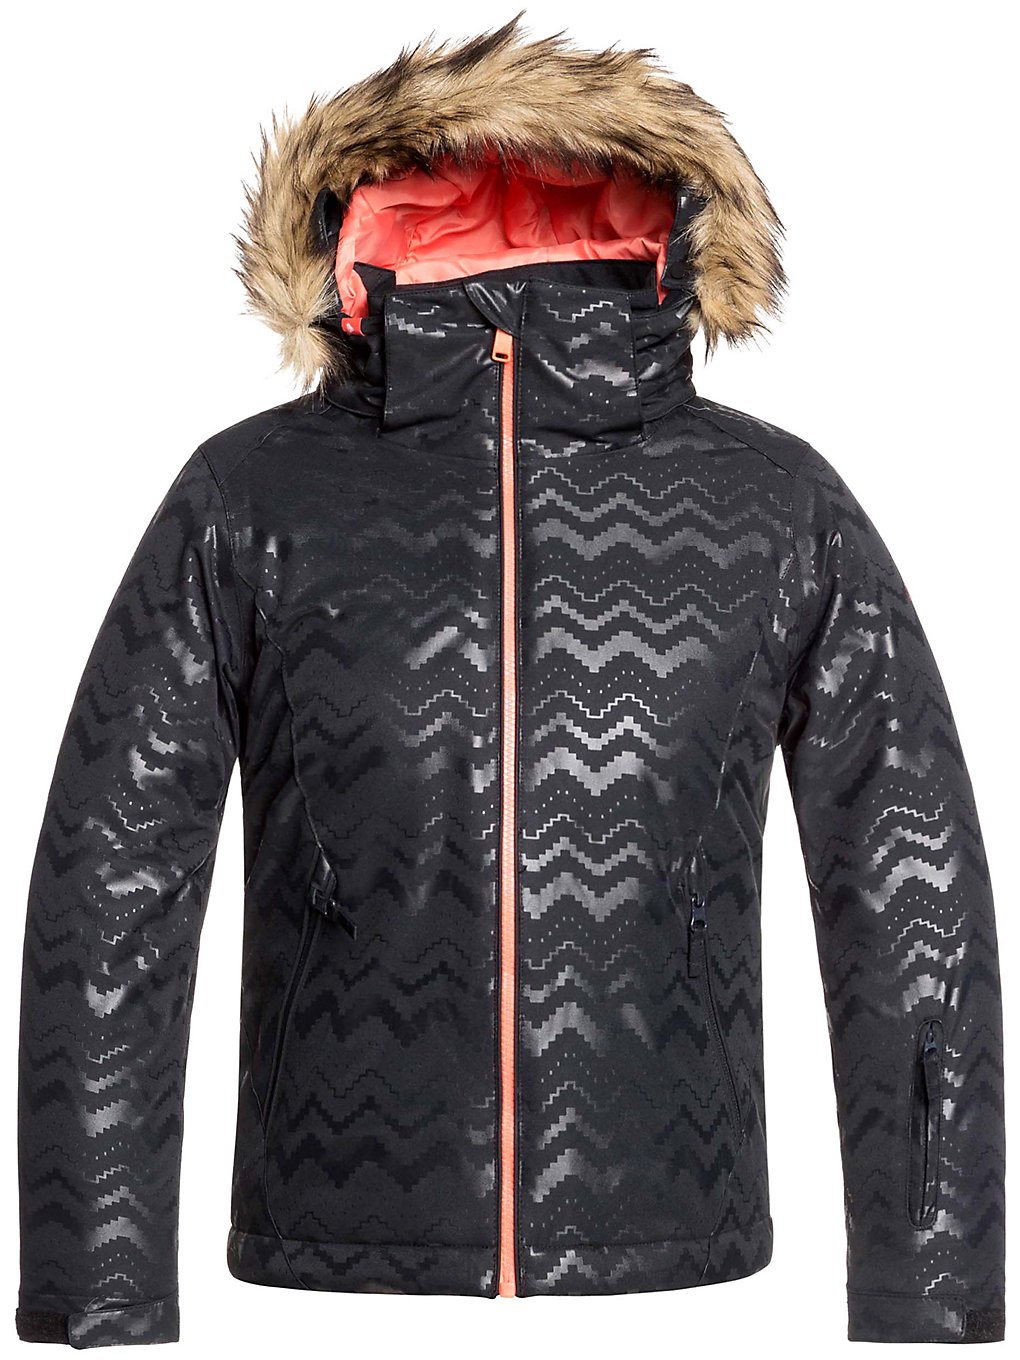 Roxy jet ski solid jacket musta, roxy